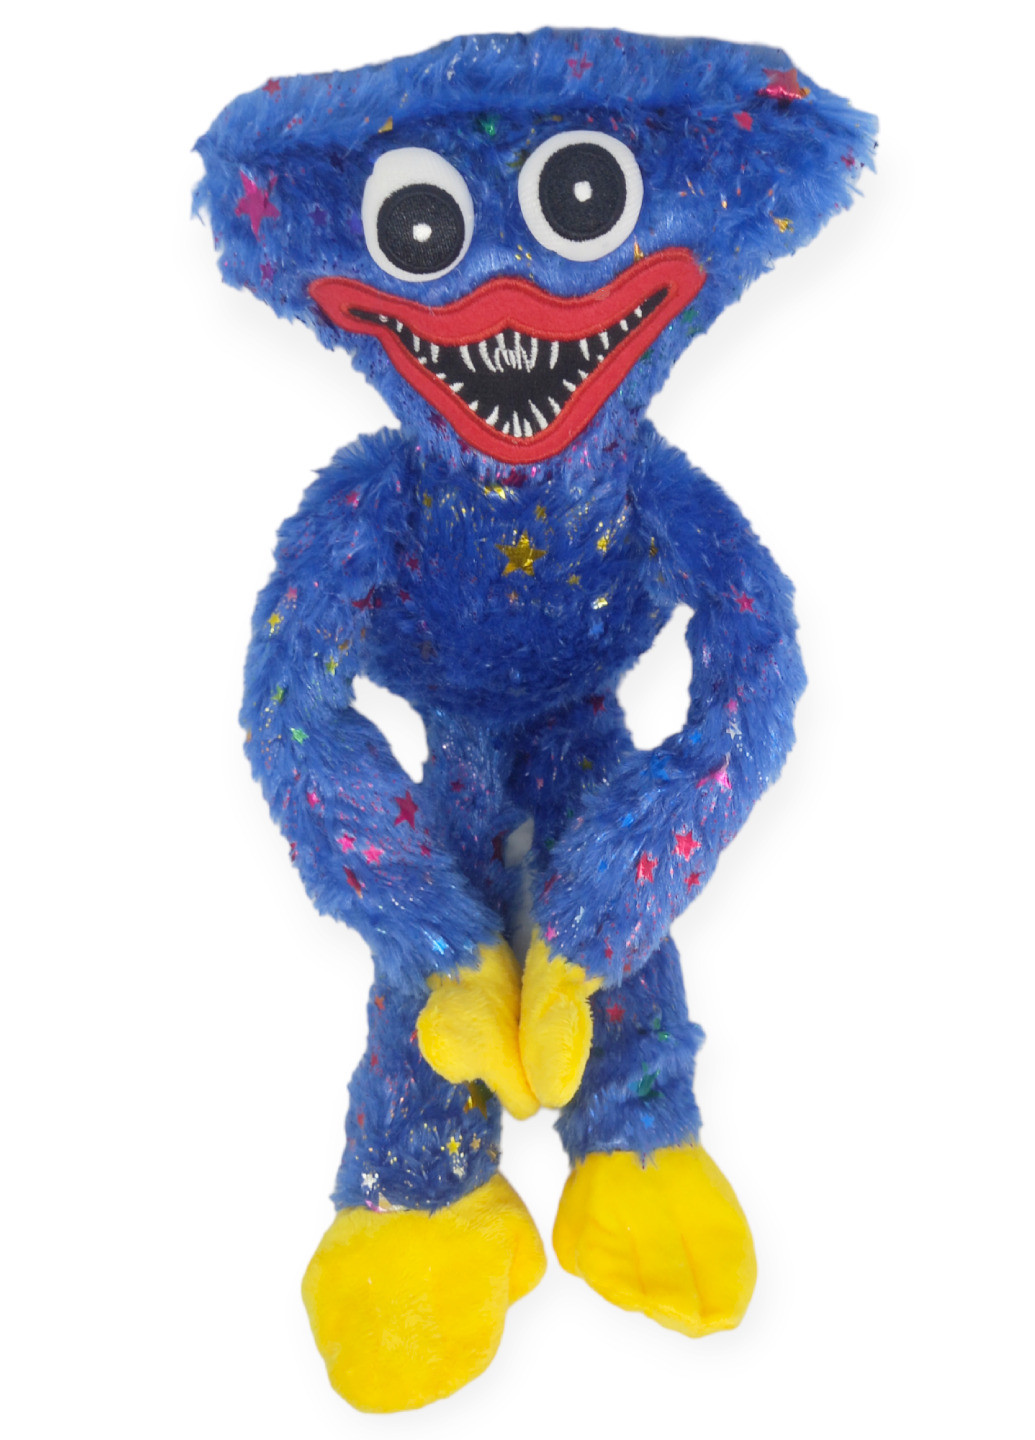 Хаги Ваги мягкая игрушка плюш 45 см с липучками на руках синий с блестяшками Huggy Wuggy Poppy Playtime No Brand (262893002)